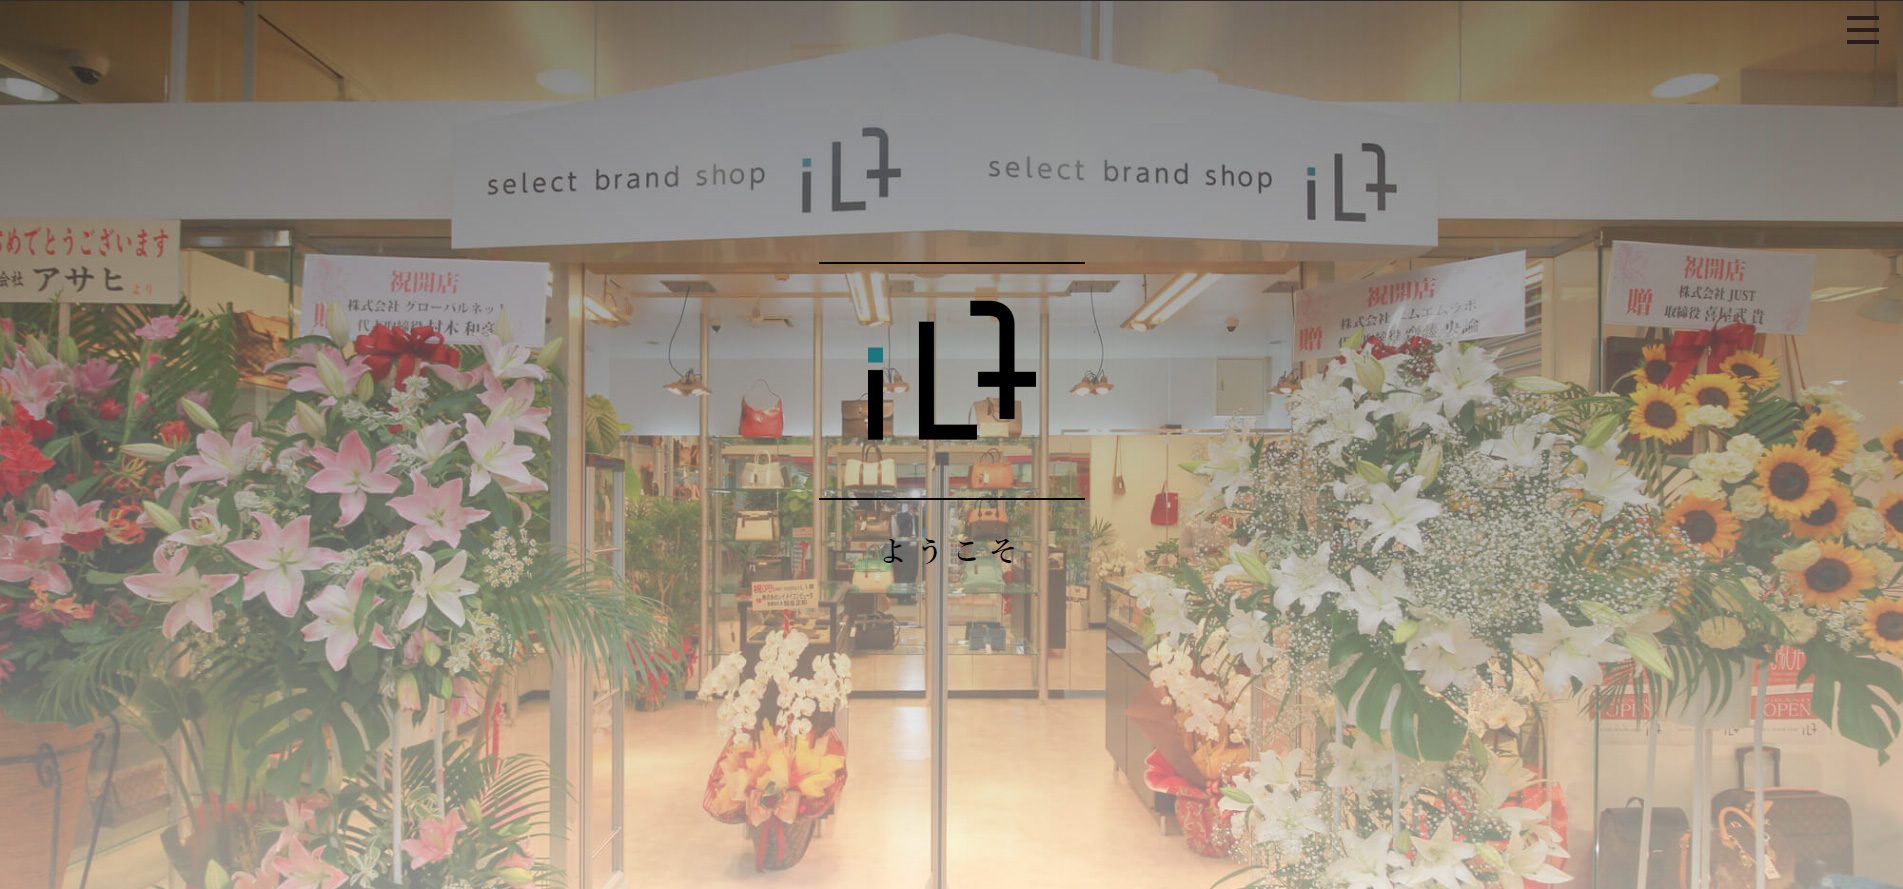 「select brand shop iLt」様のHP